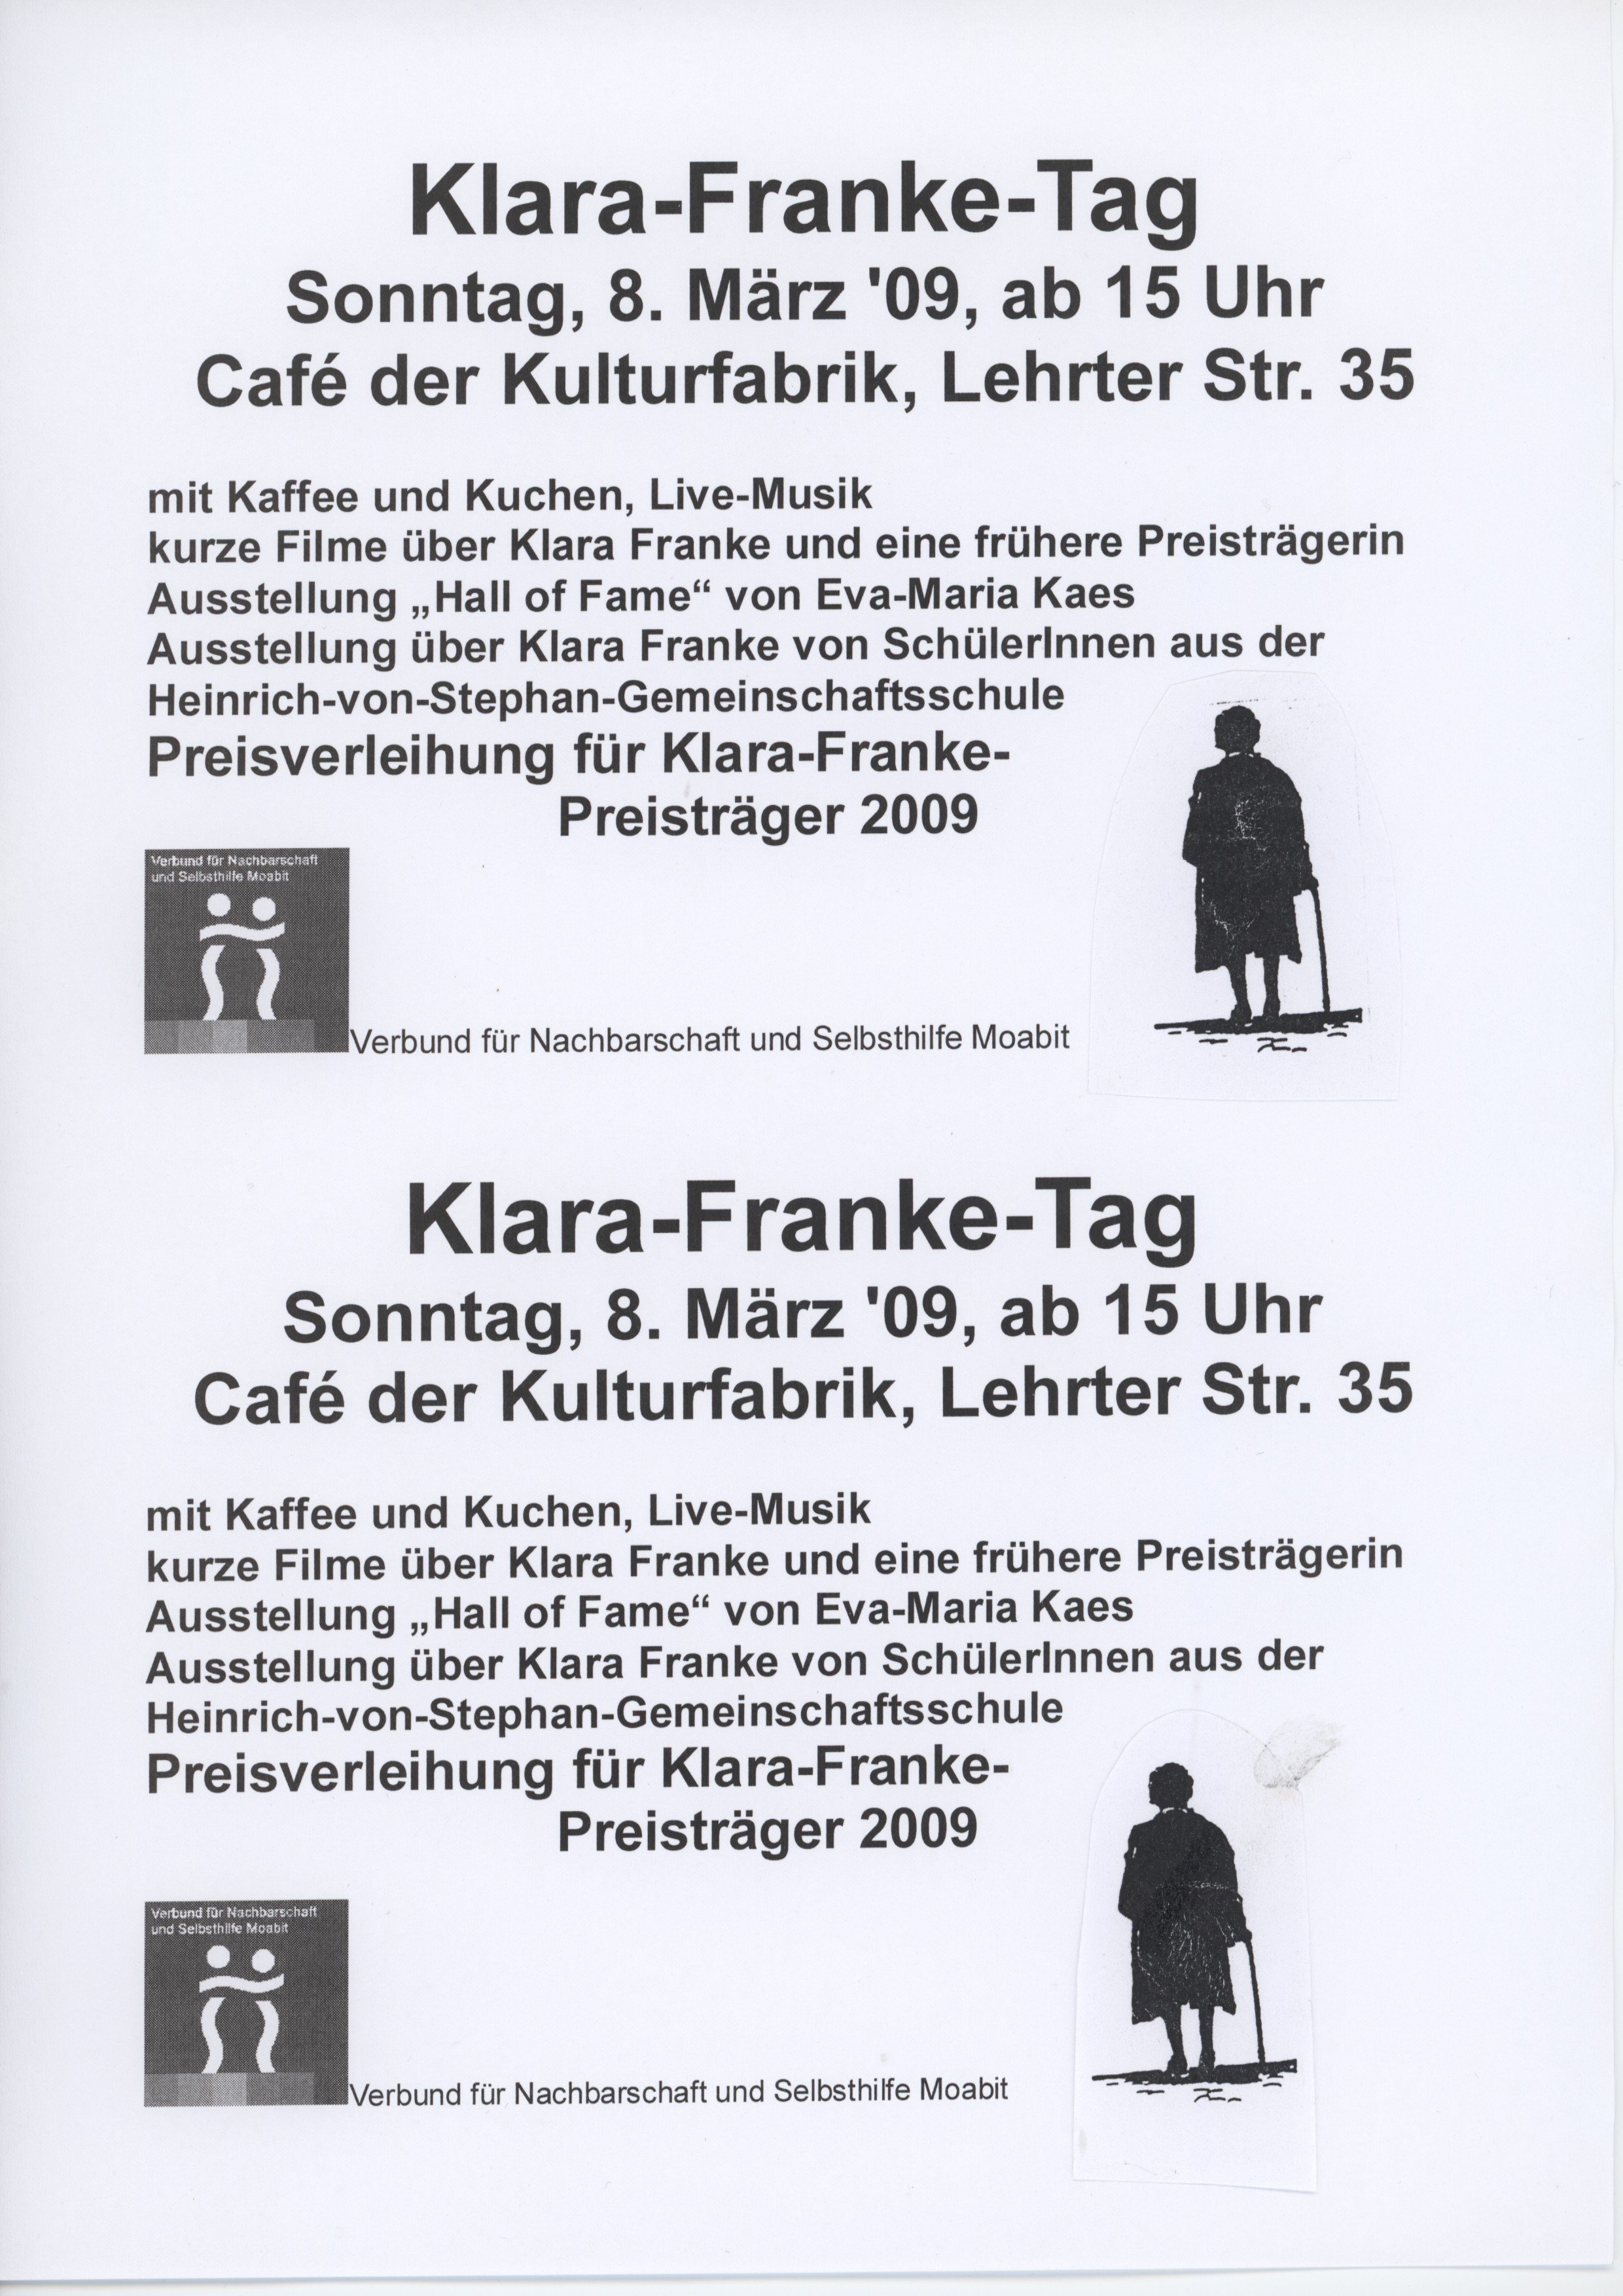 Fotokopie-Vorlage zum Klara-Franke-Tag 2009 (B-Laden CC BY-NC-SA)